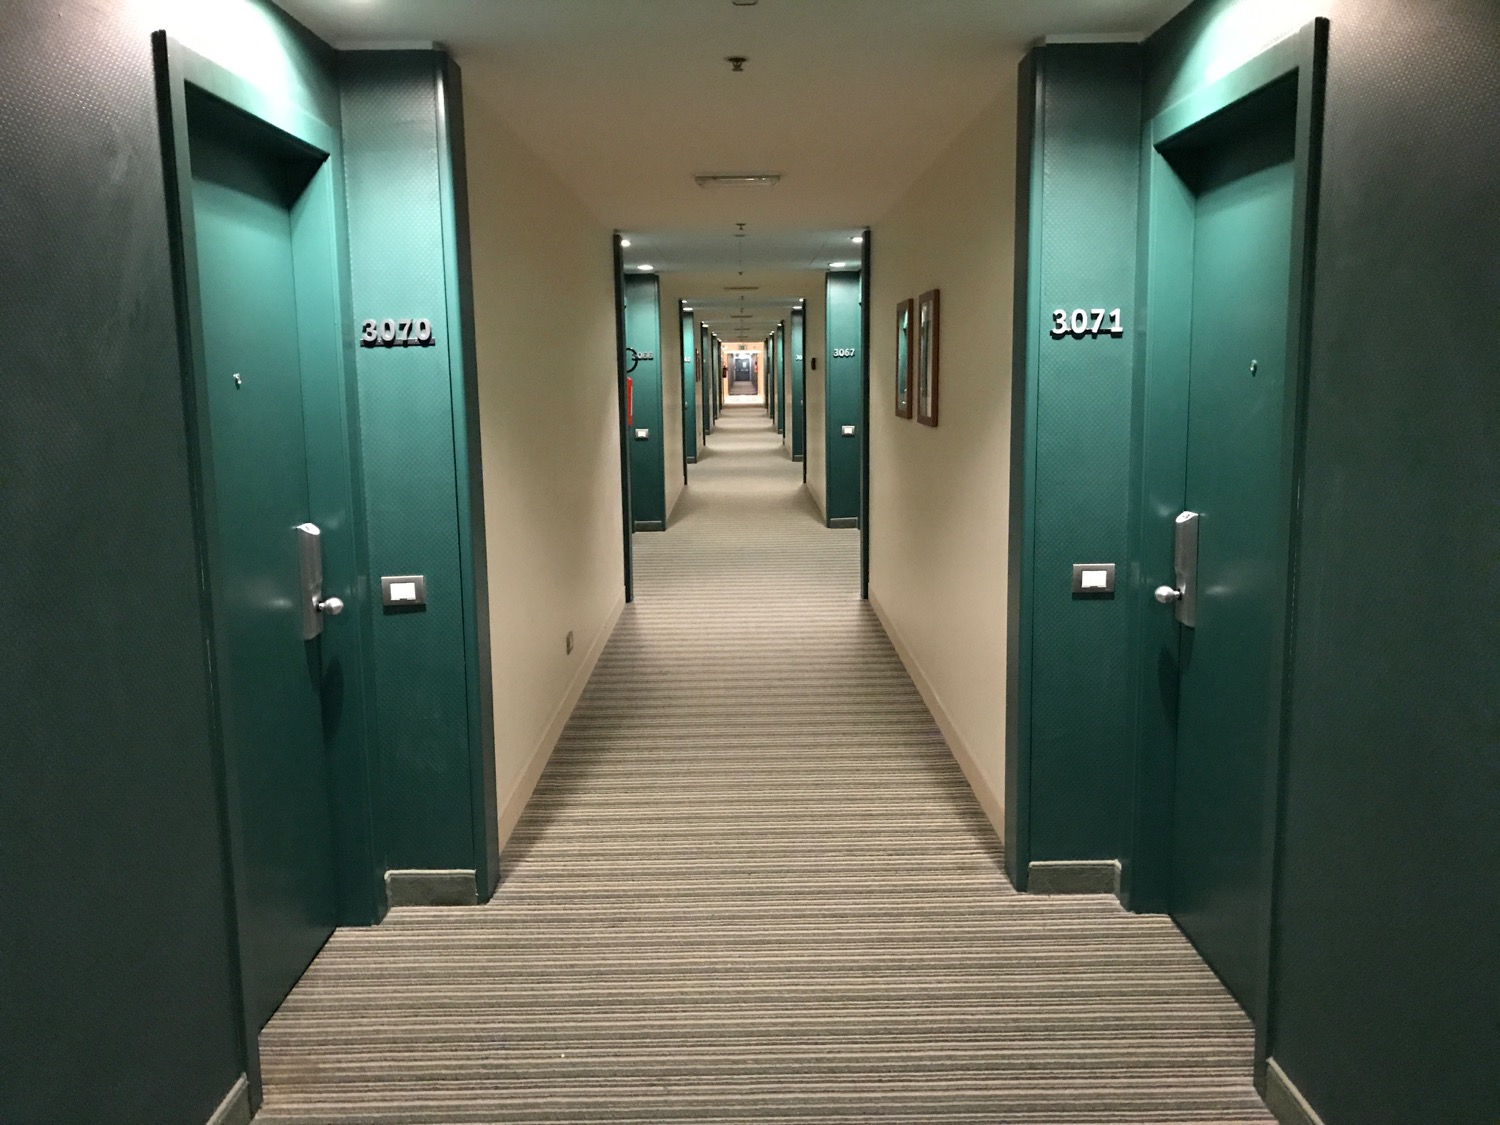 a hallway with green doors